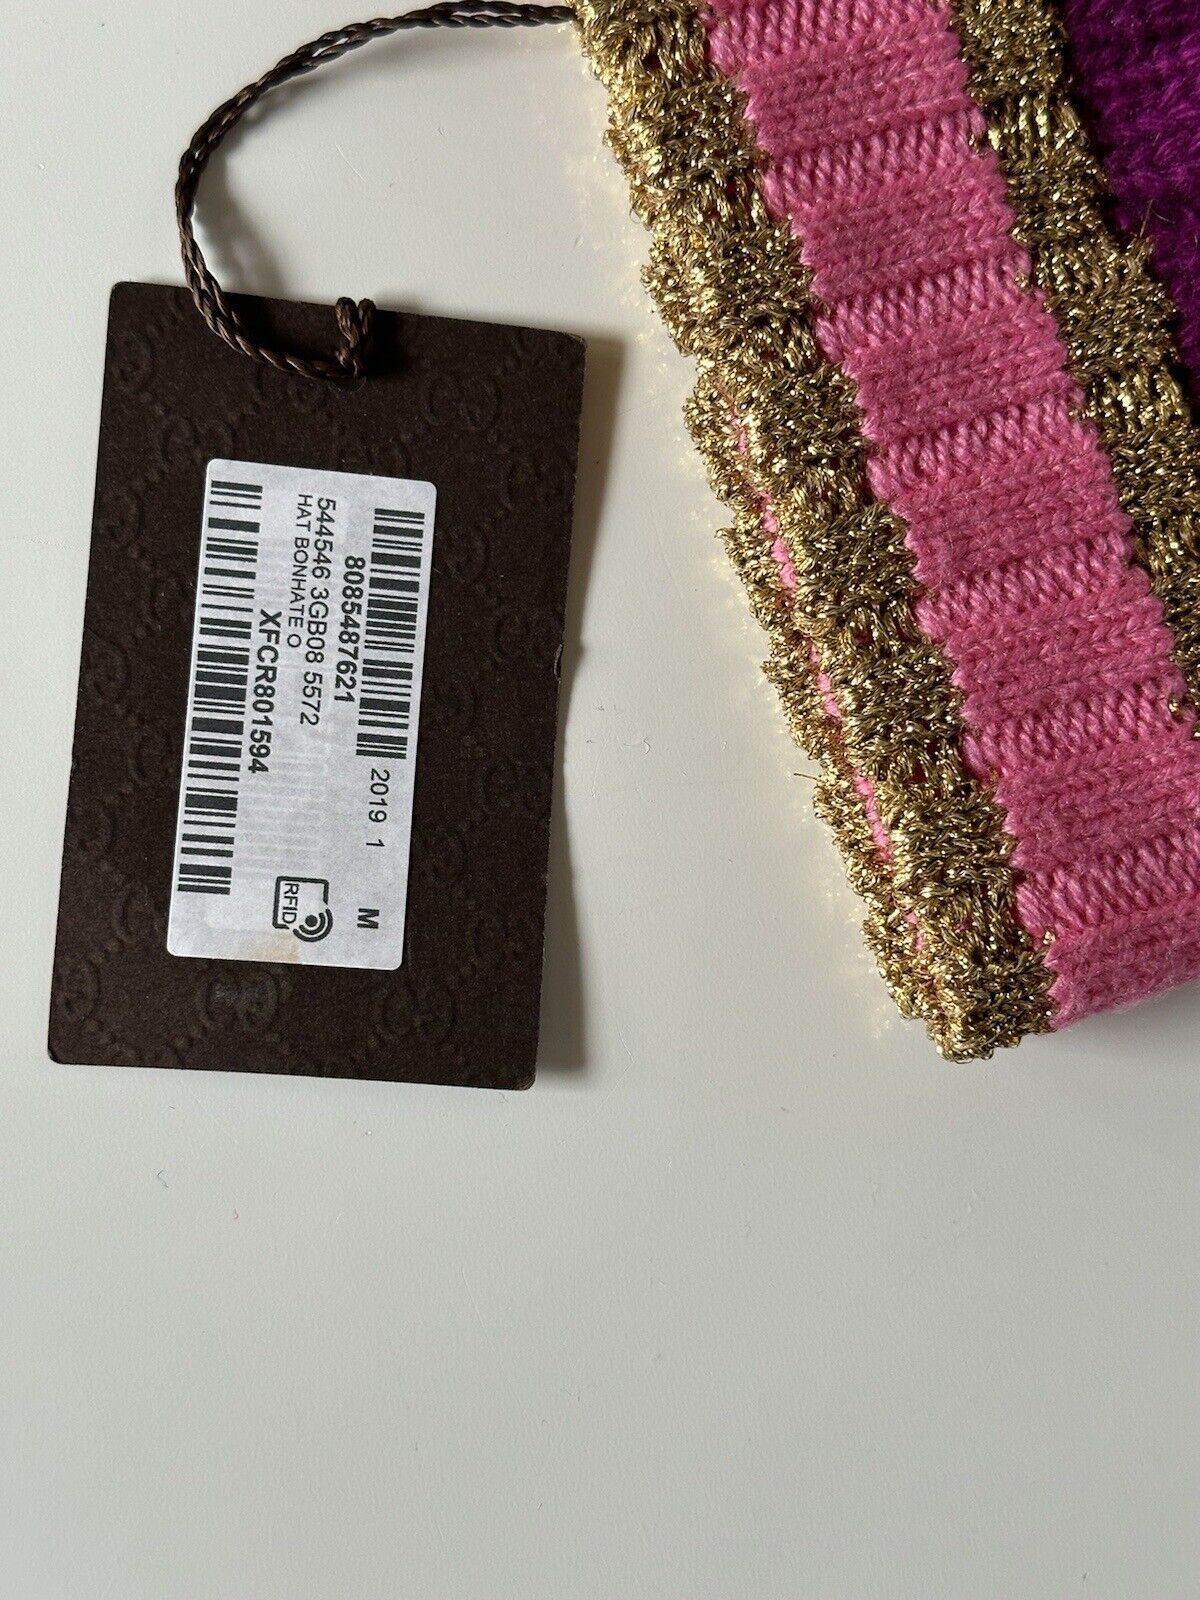 NWT Gucci Knit Wool/Cashmere Magenta/Pink Beanie Hat Medium (57 cm) Italy 544546